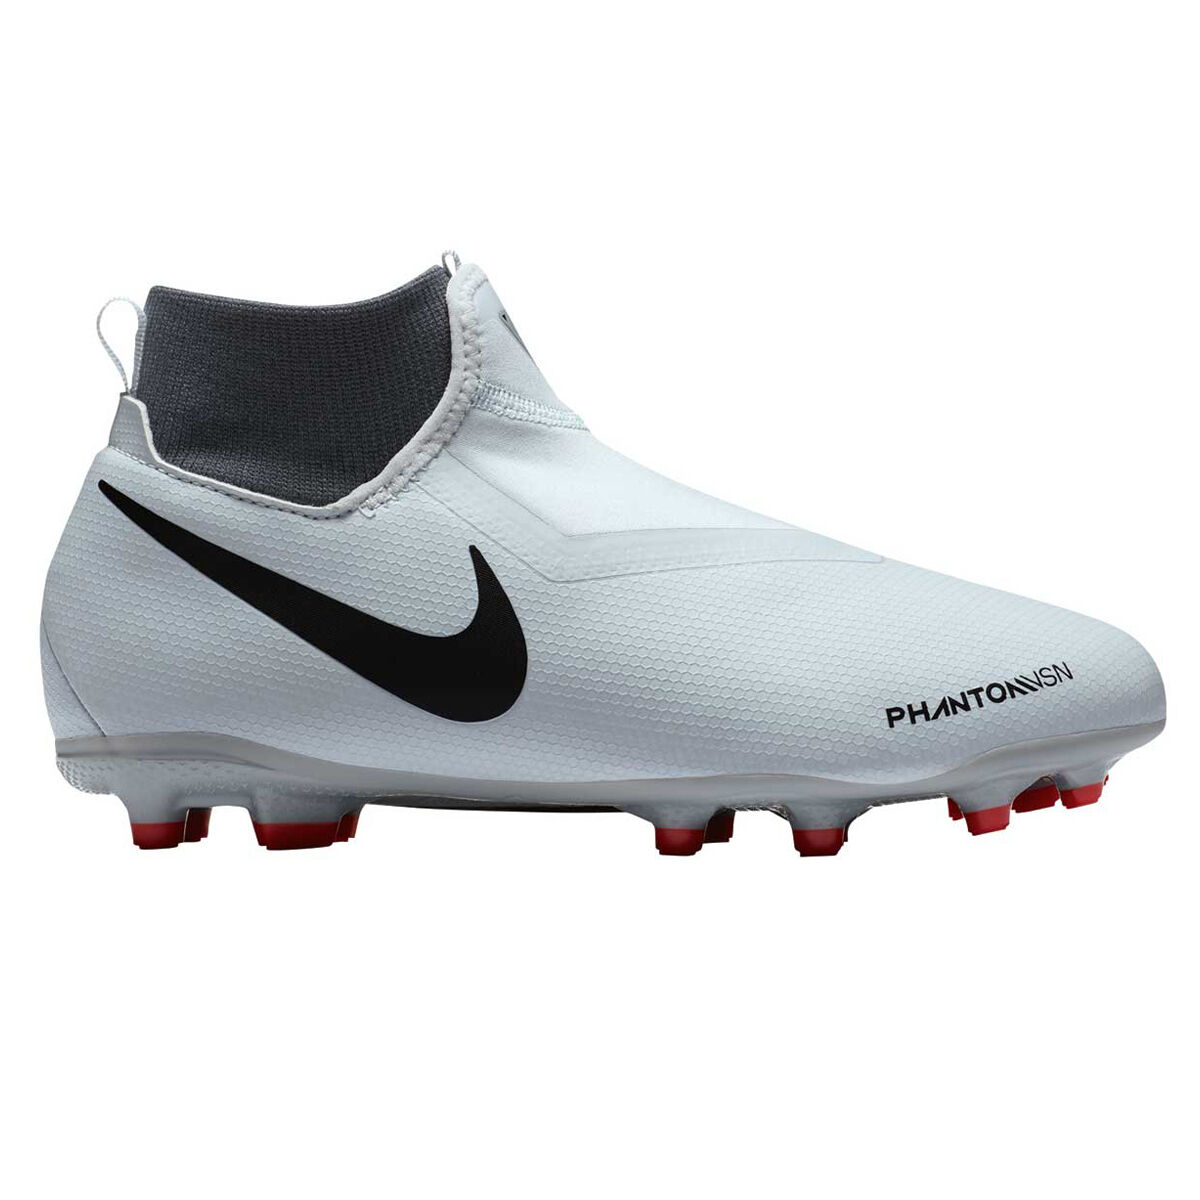 Nike Phantom Vision Academy DF FG Football Boots £ 65.00